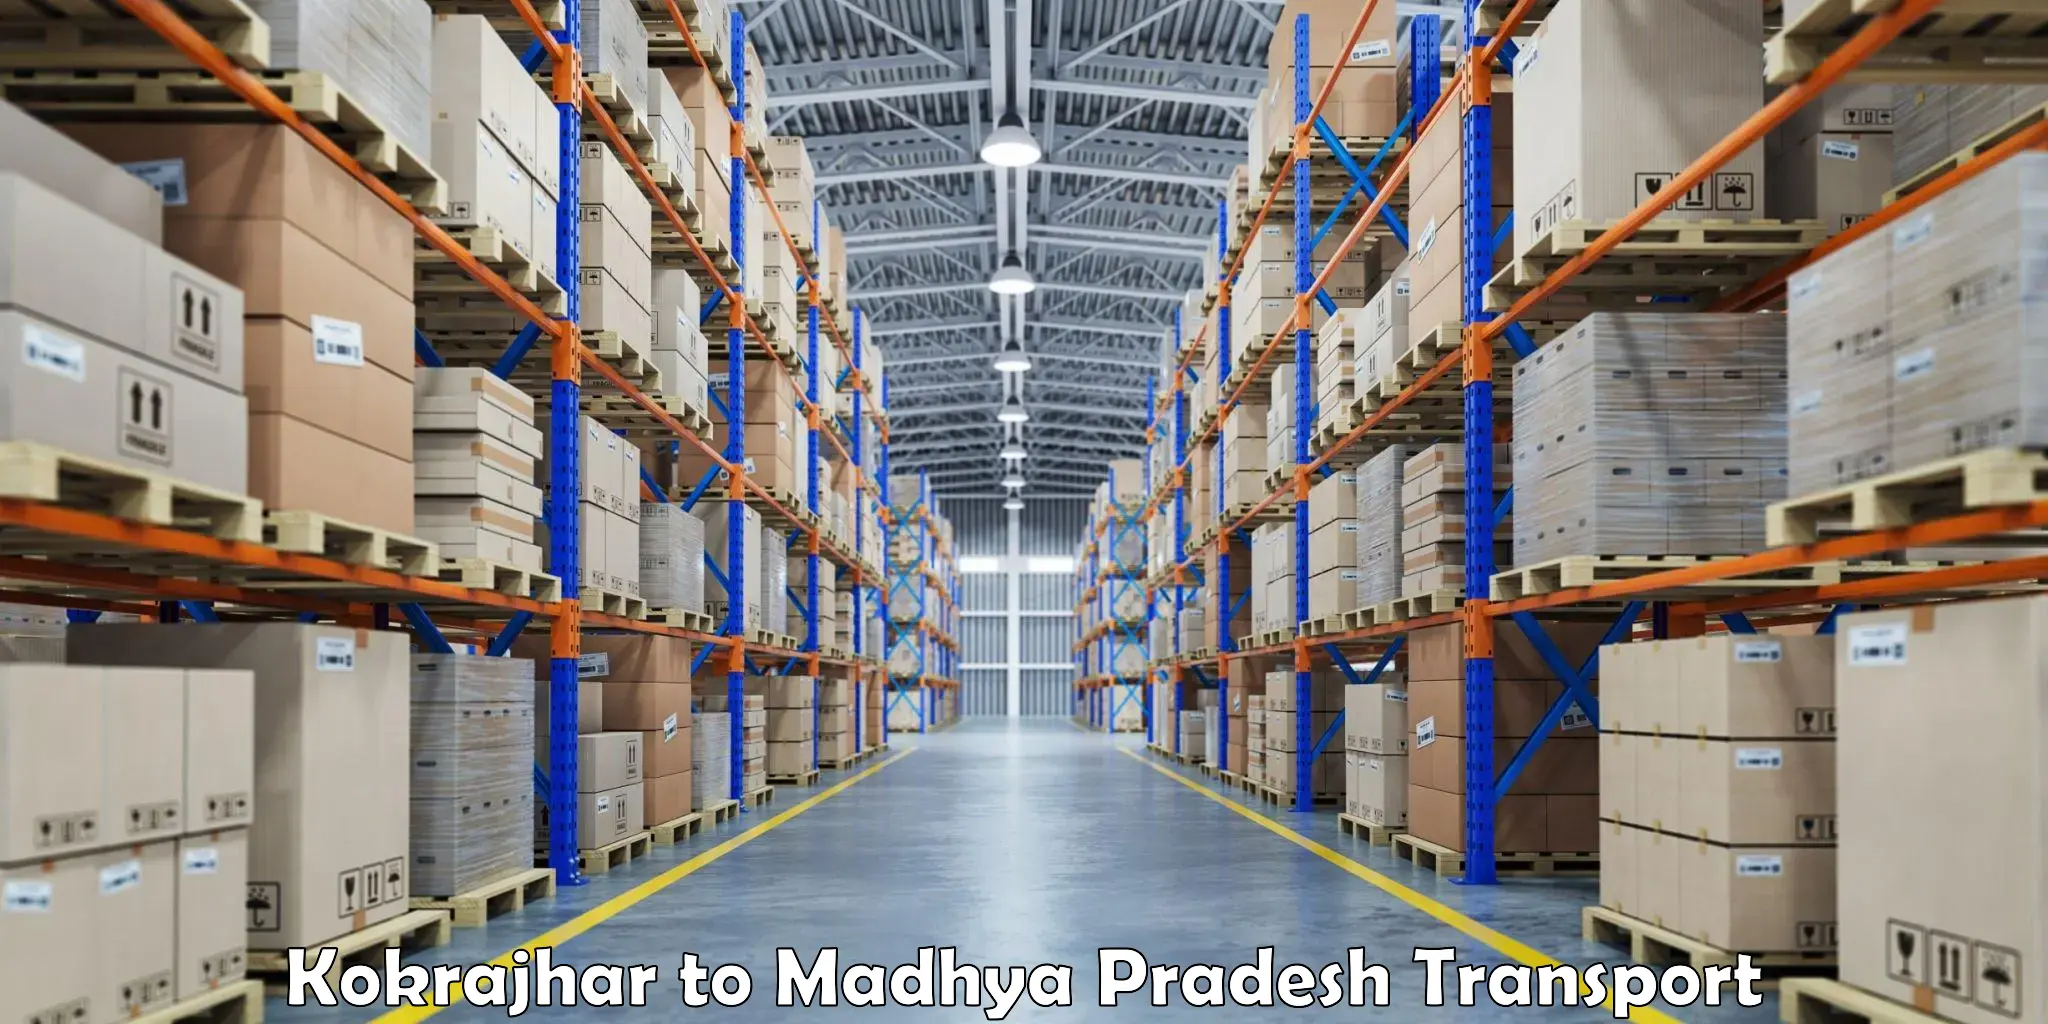 Truck transport companies in India Kokrajhar to Shahgarh